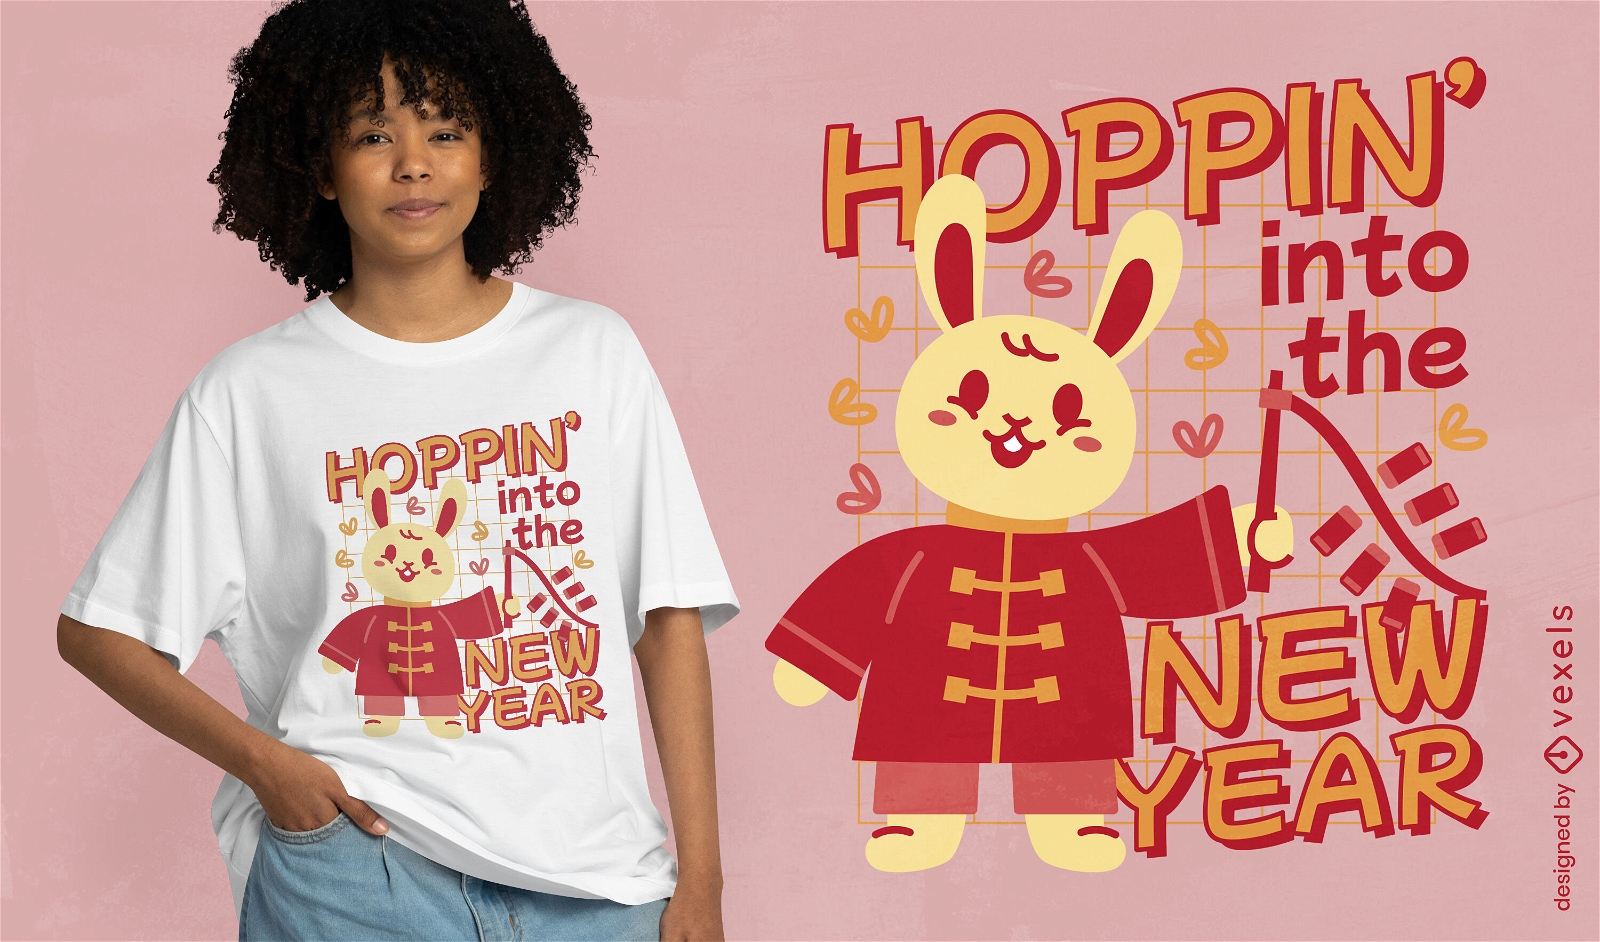 Hopefulness new year t-shirt design